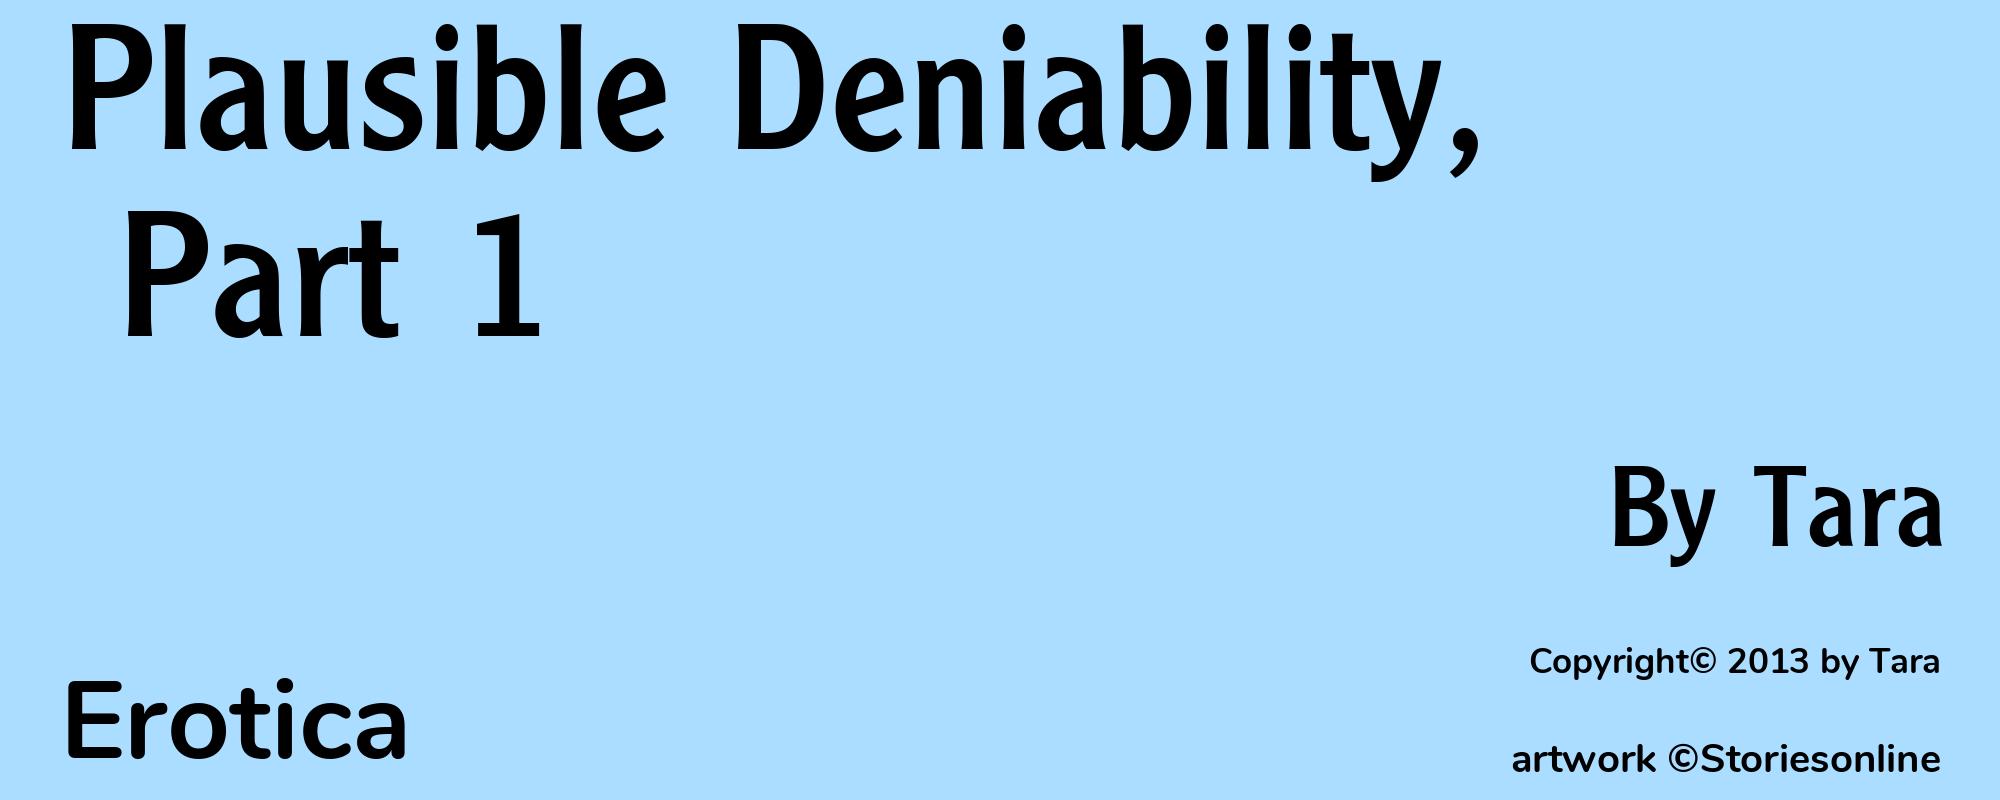 Plausible Deniability, Part 1 - Cover